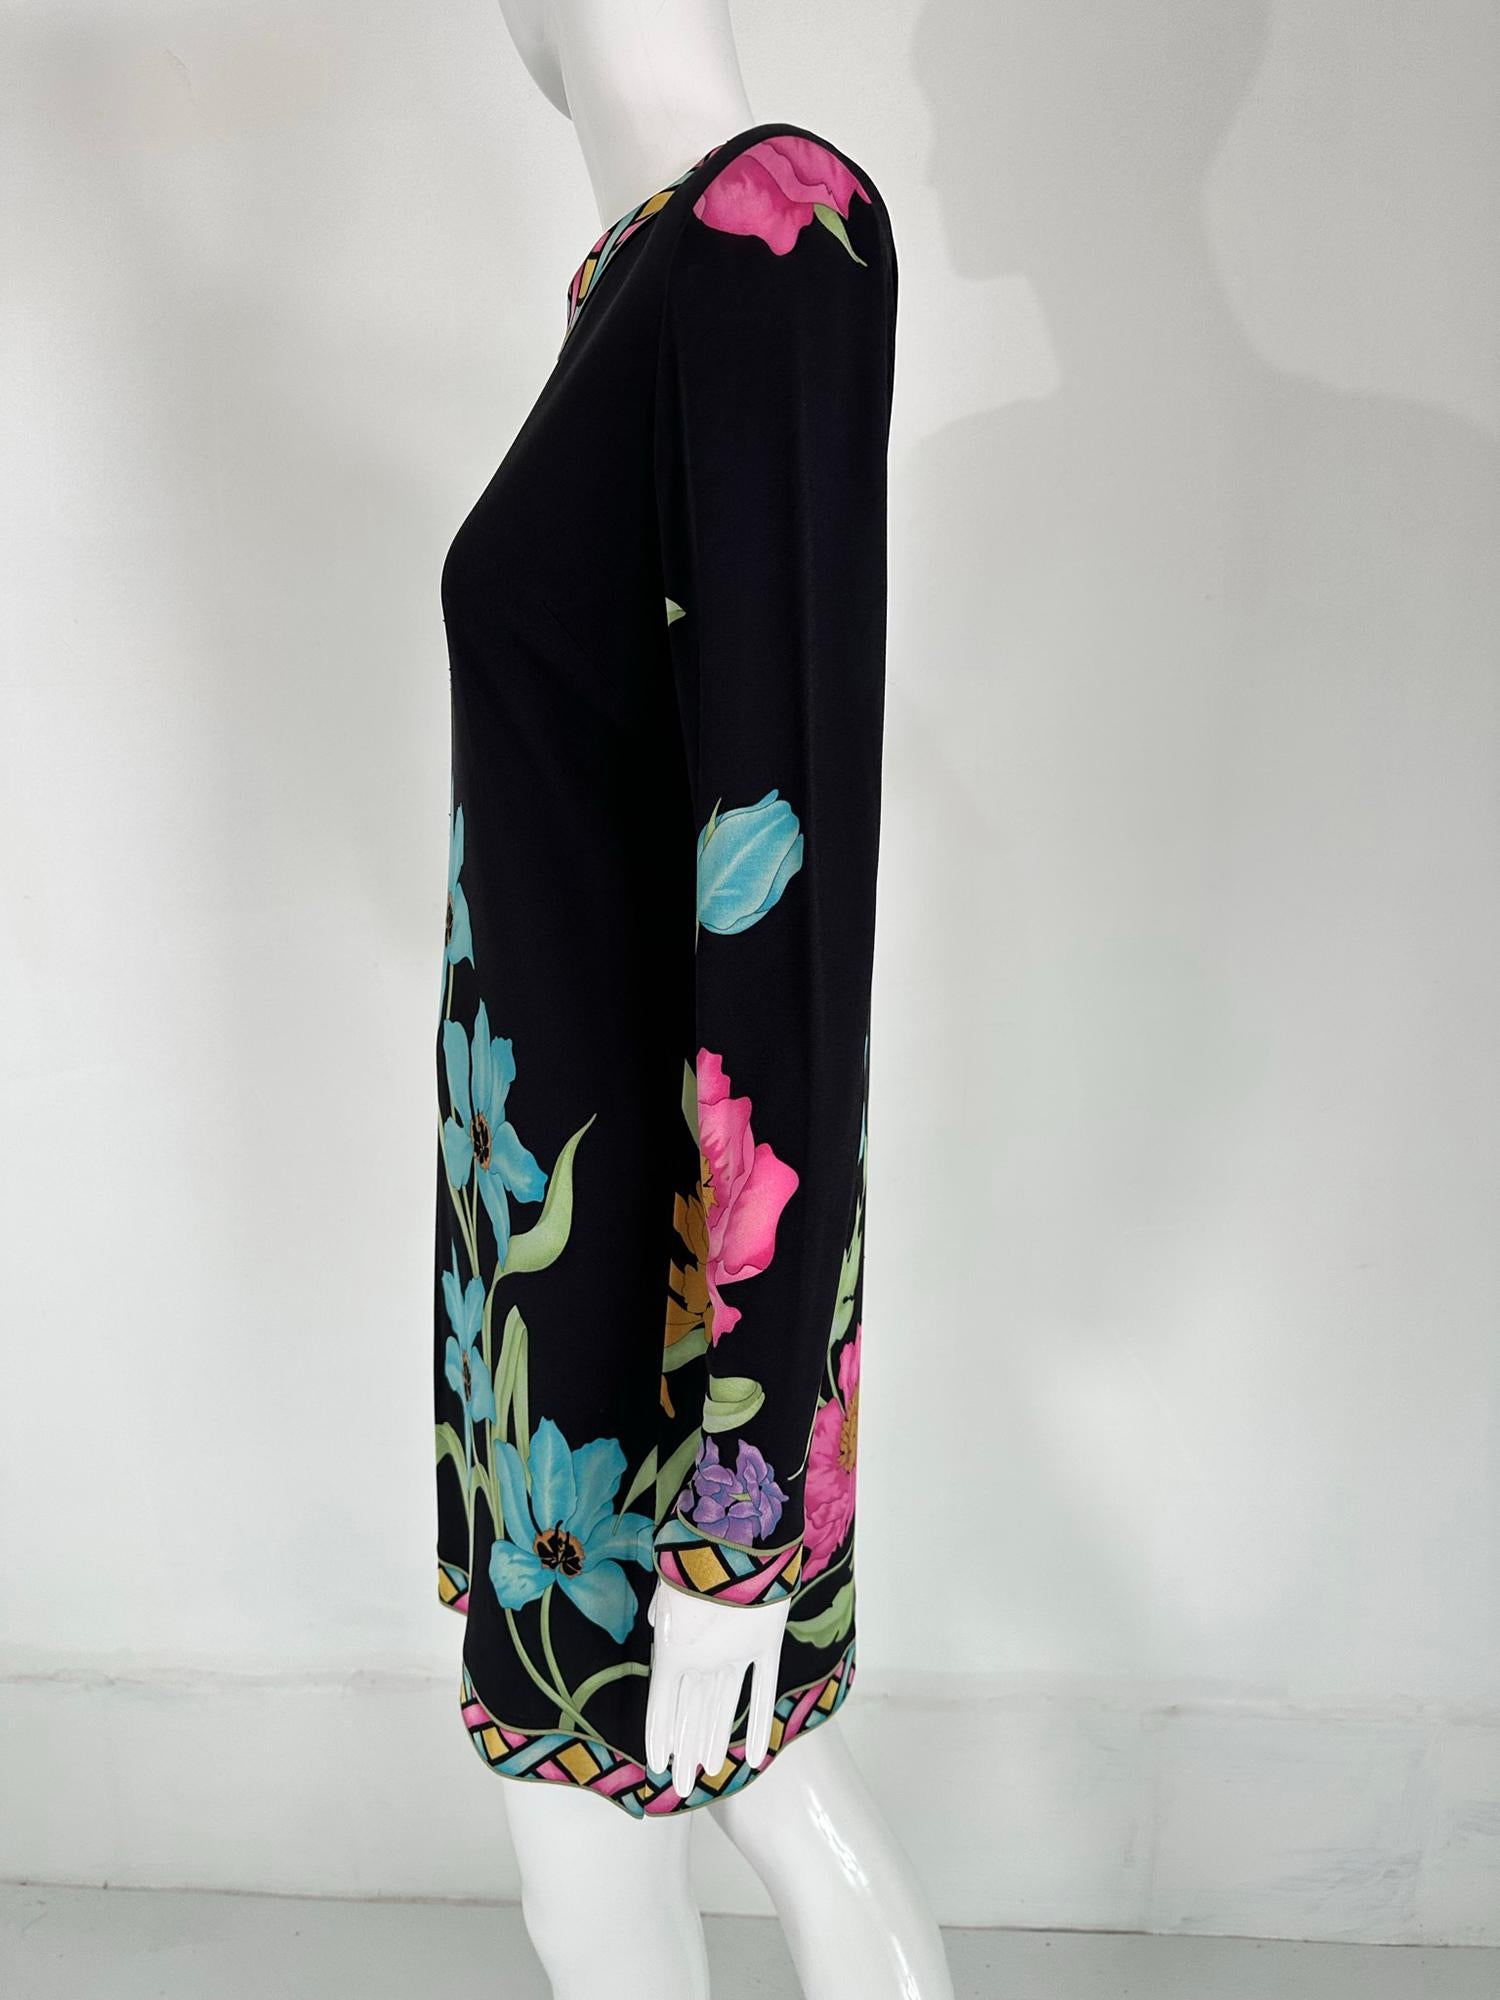 Averaro Bessi Spectacular Silk Vibrant Floral Tunic Dress 12  For Sale 7